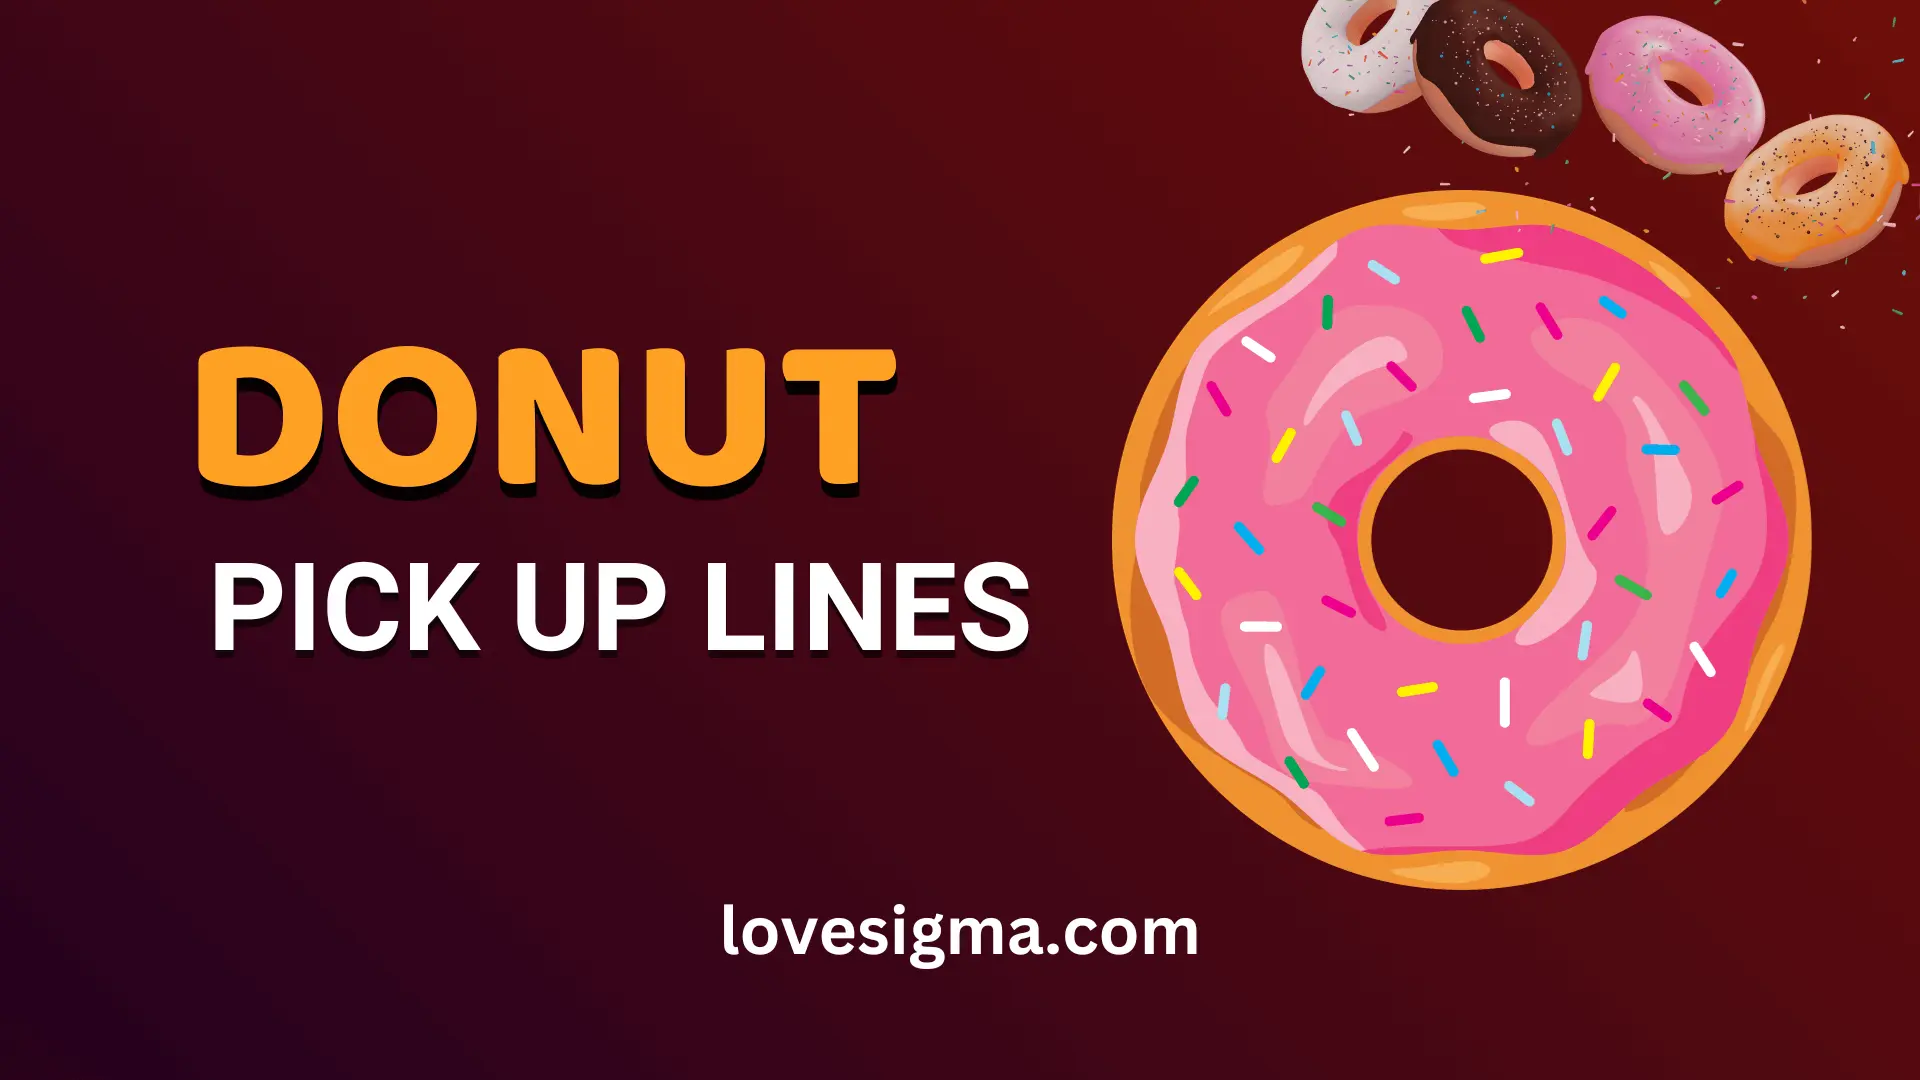 Donut Pickup Lines